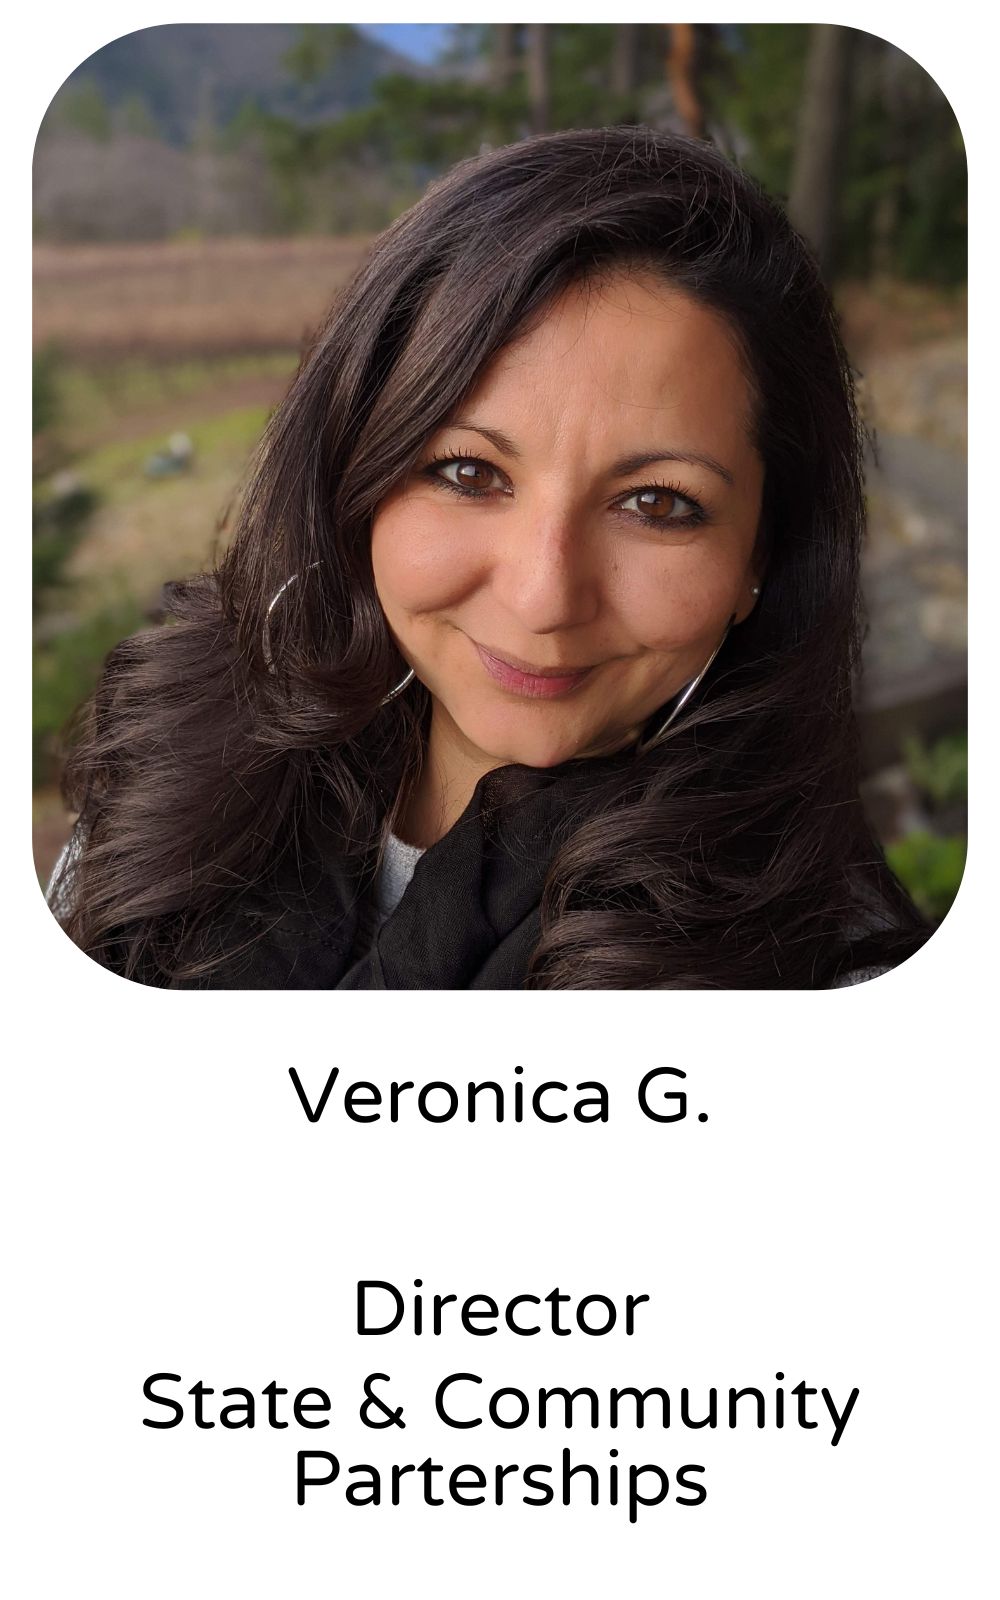 Veronica G., Director, State & Community Partnerships